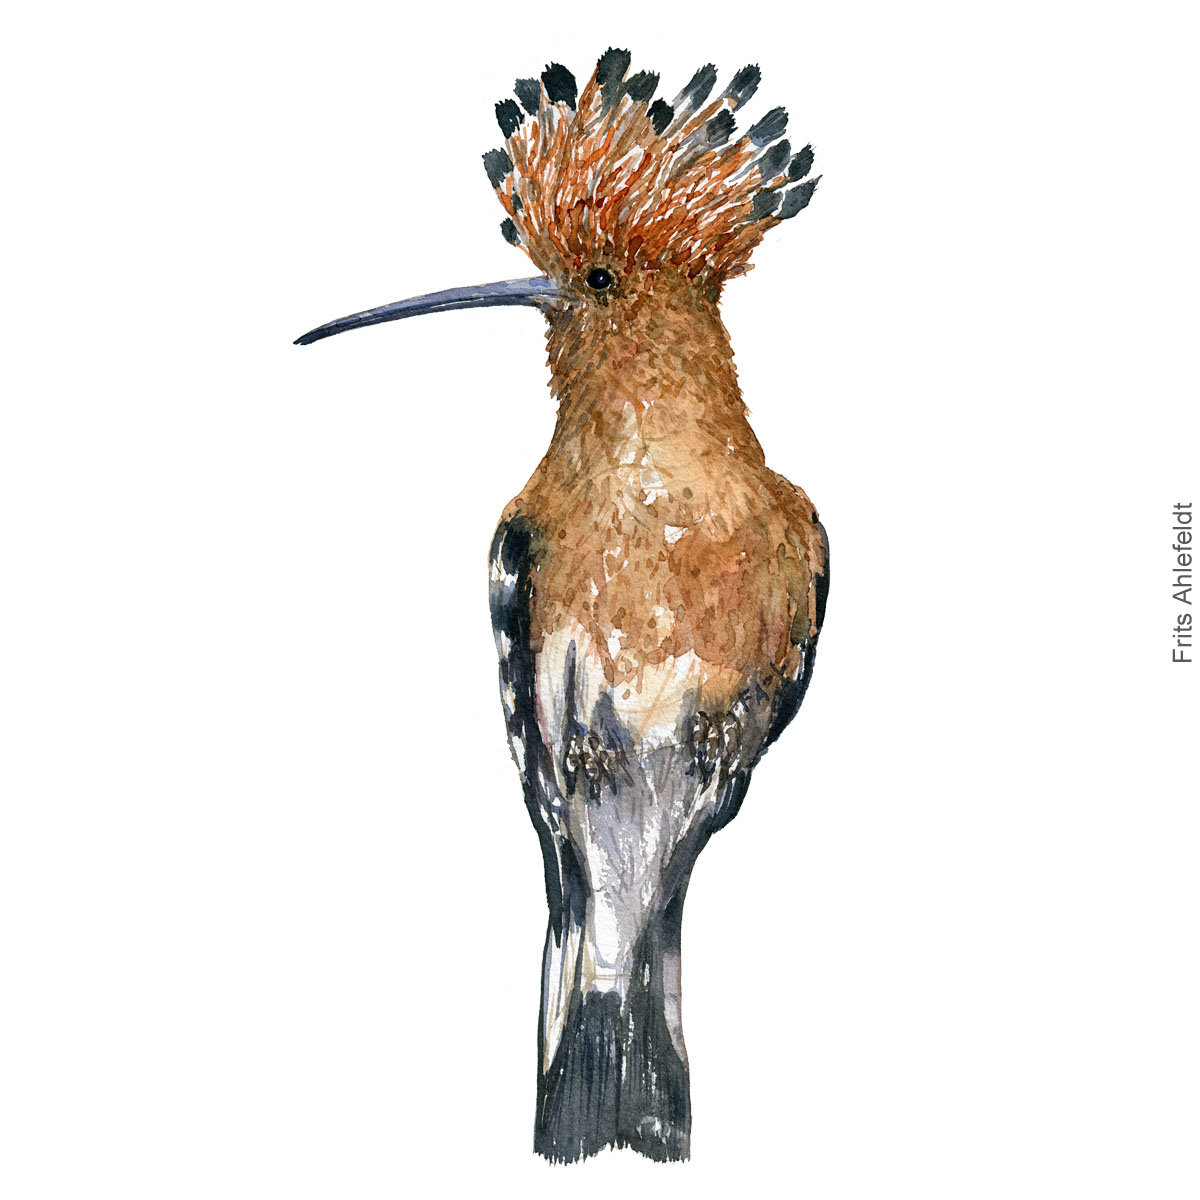 Haerfugl - Eurasian Hoopoe bird watercolor illustration. Painting by Frits Ahlefeldt. Fugle akvarel